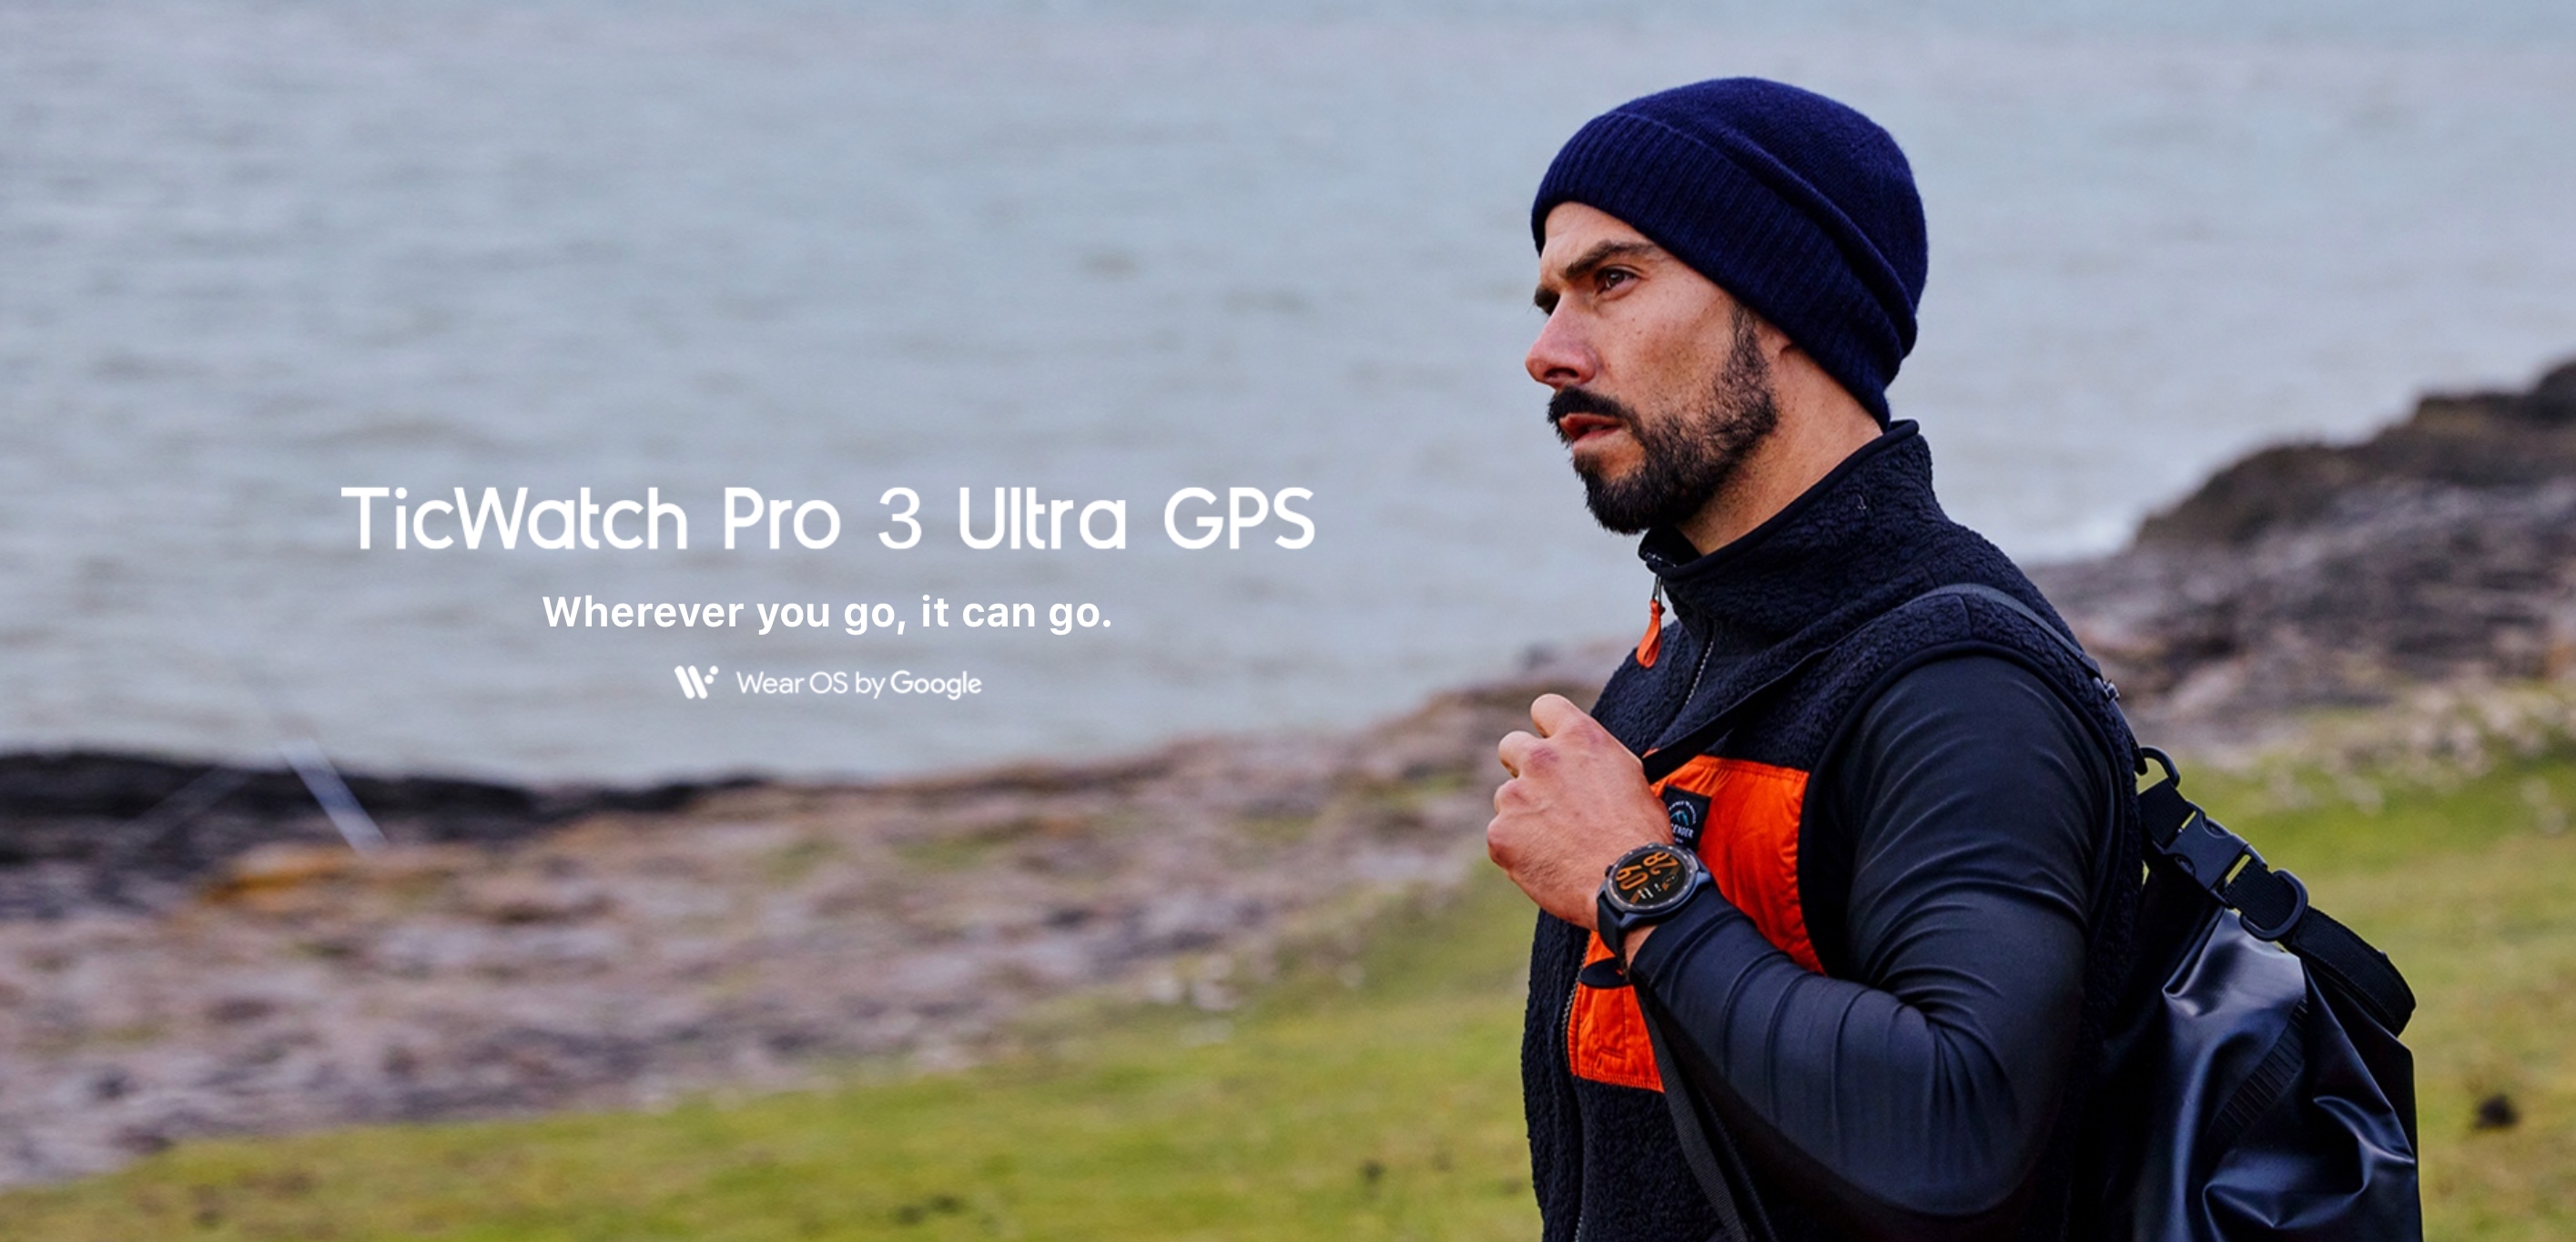 mobvoi TicWatch Pro 3 Ultra GPS